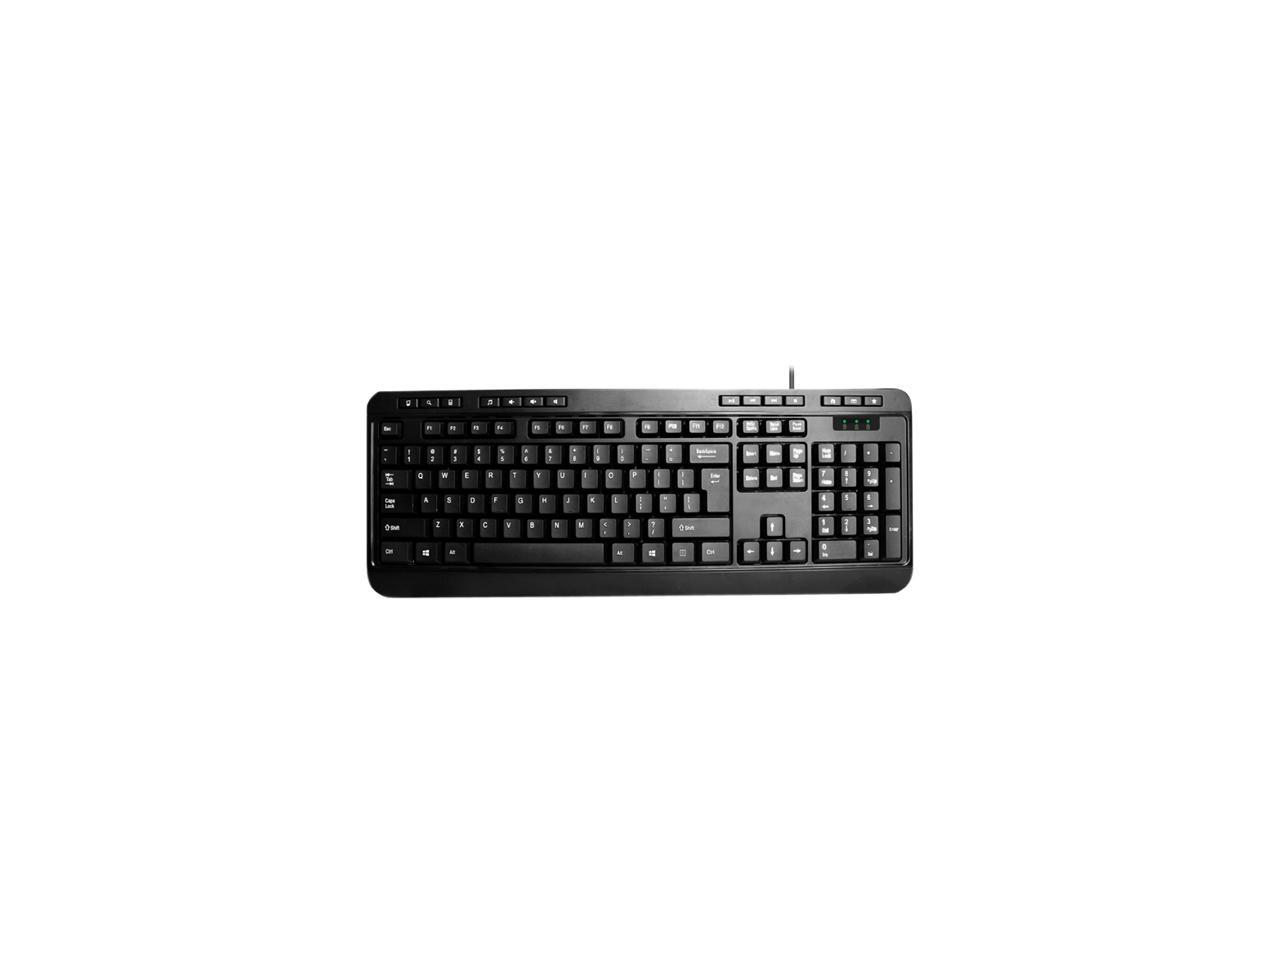 Adesso AKB-132UB Desktop Multimedia USB keyboard (Black)